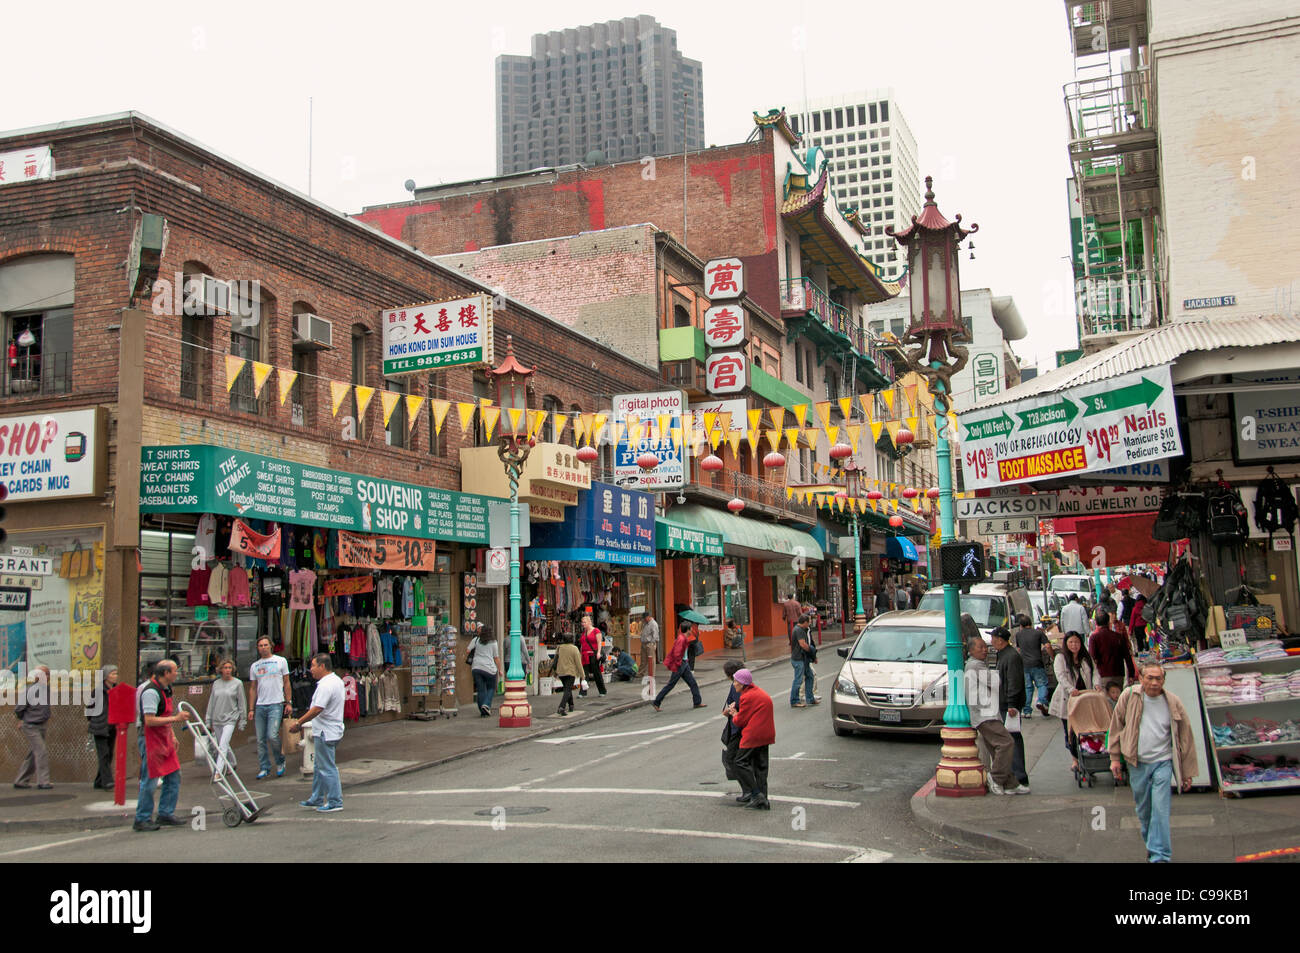 Chinatown China Town Chinese San Francisco California United States of America Stock Photo